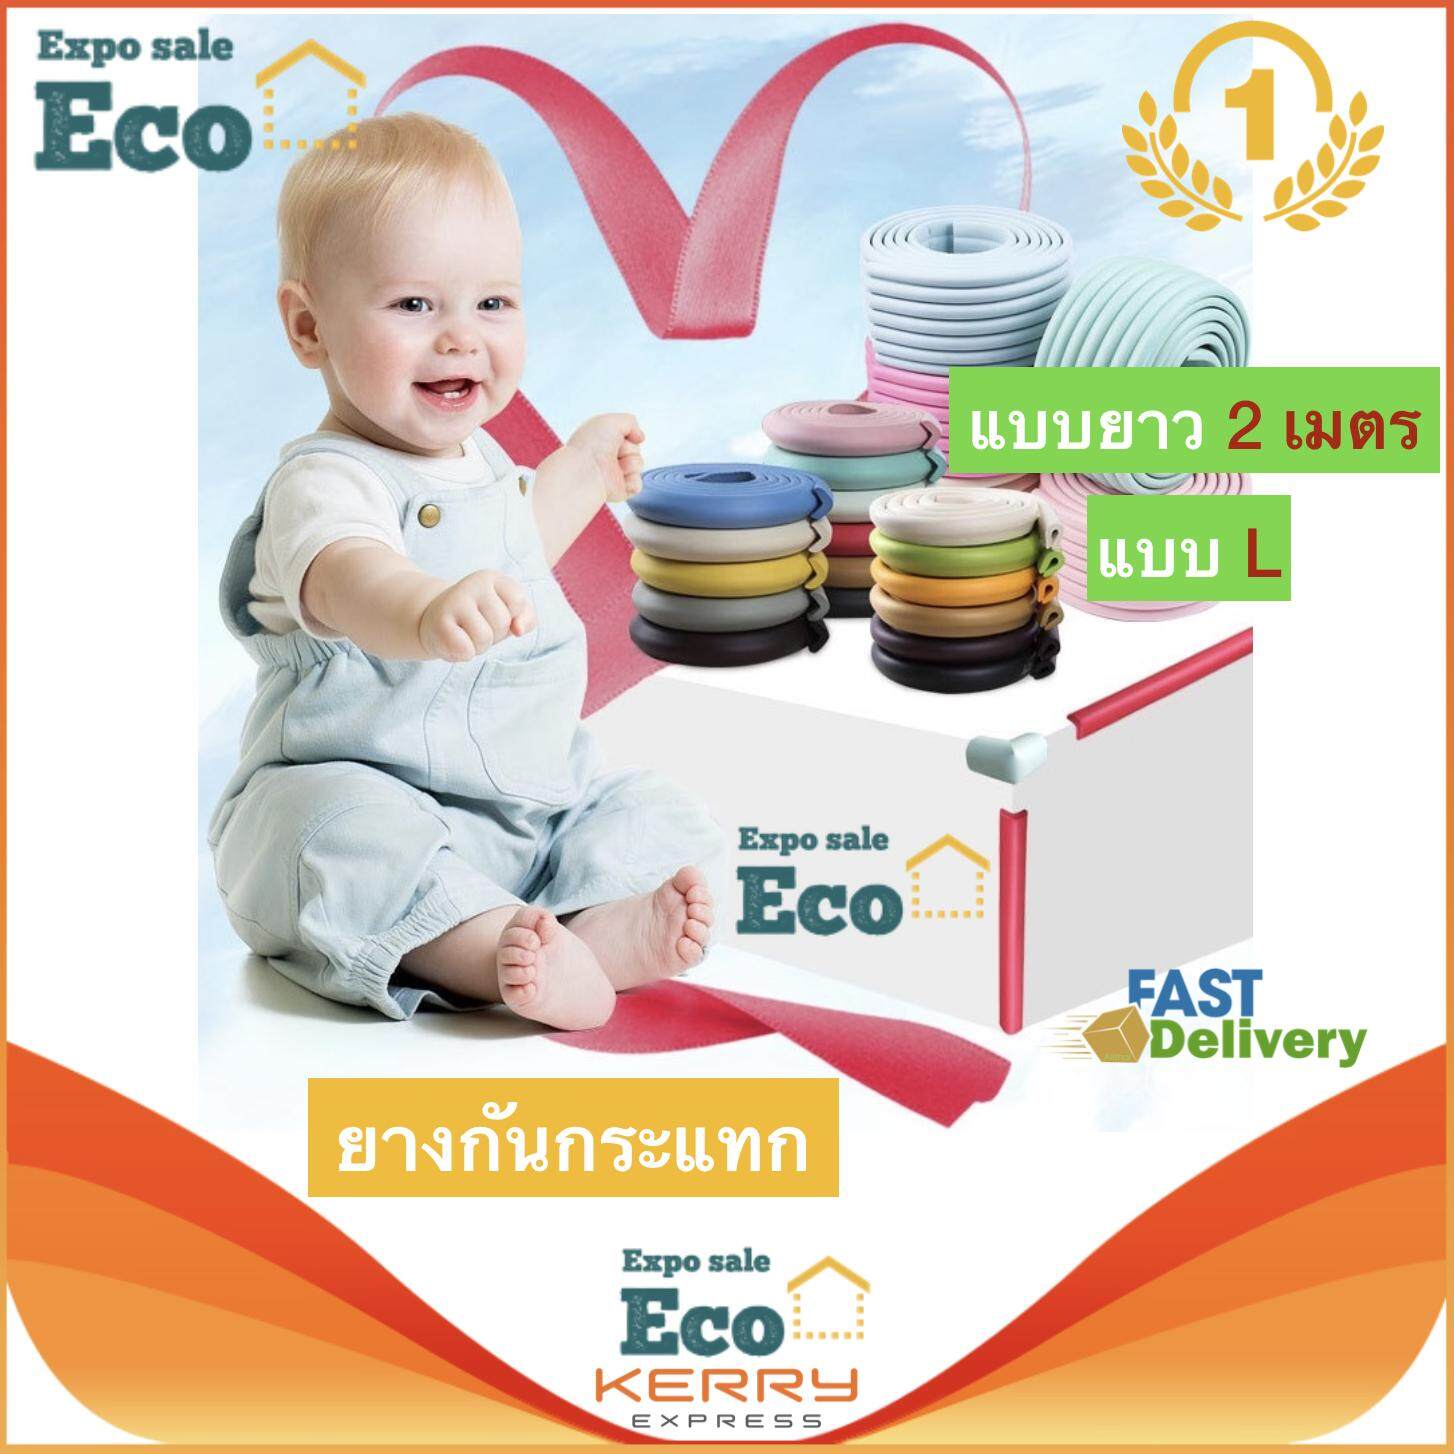 Eco Home ยางกันกระแทก แบบยาว 2 เมตร ยางกันกระแทกแบบเข้ามุม ยางกันกระแทกขอบโต๊ะ เพิ่มความปลอดภัยในบ้านคุณ แถมกาวแปะฟรี Baby Safety Guard Protector